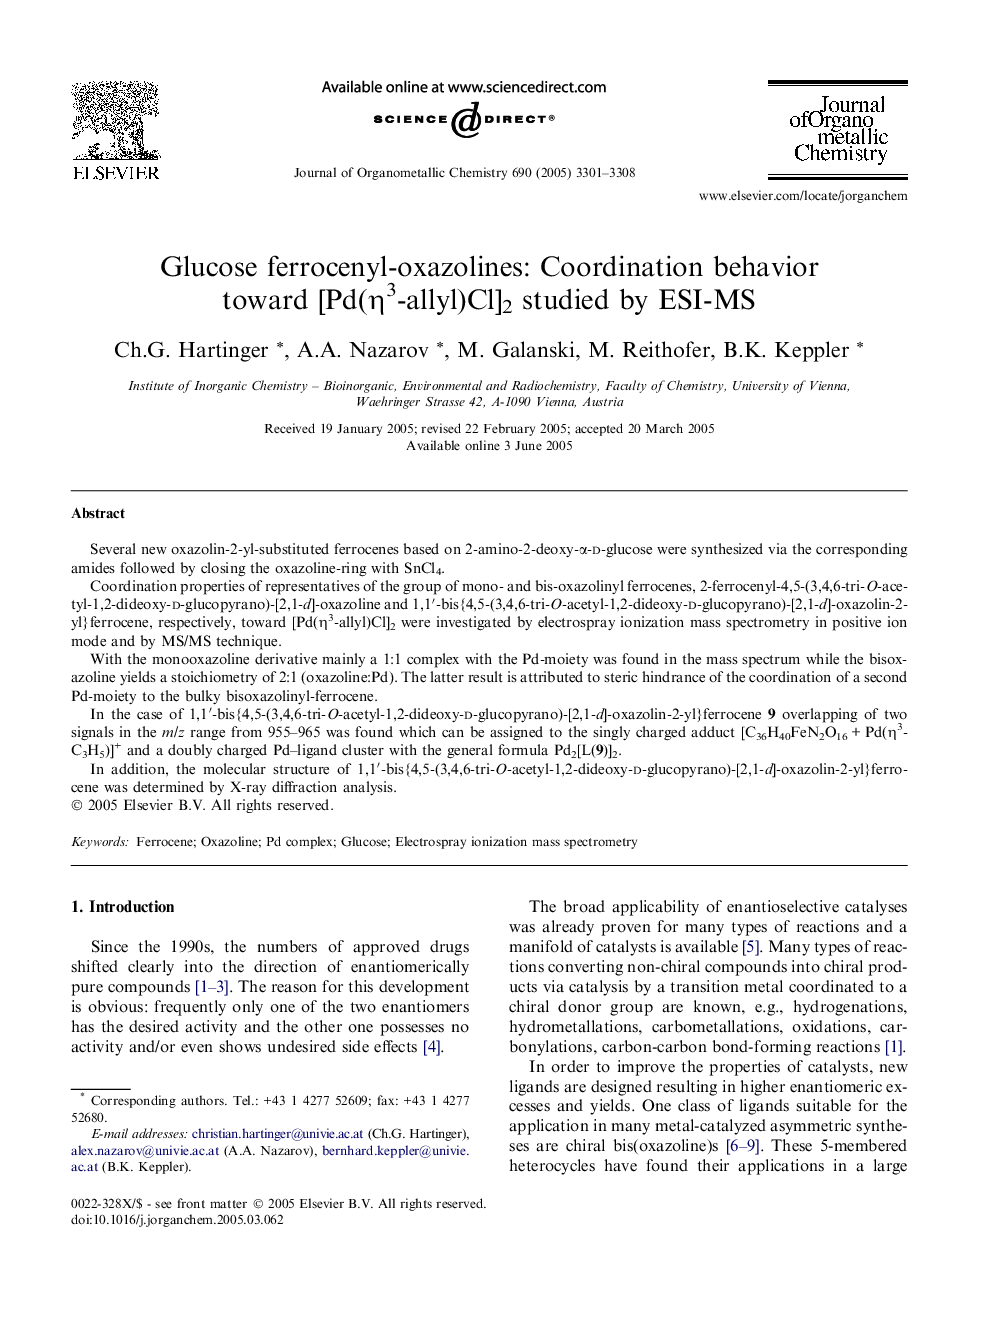 Glucose ferrocenyl-oxazolines: Coordination behavior toward [Pd(η3-allyl)Cl]2 studied by ESI-MS